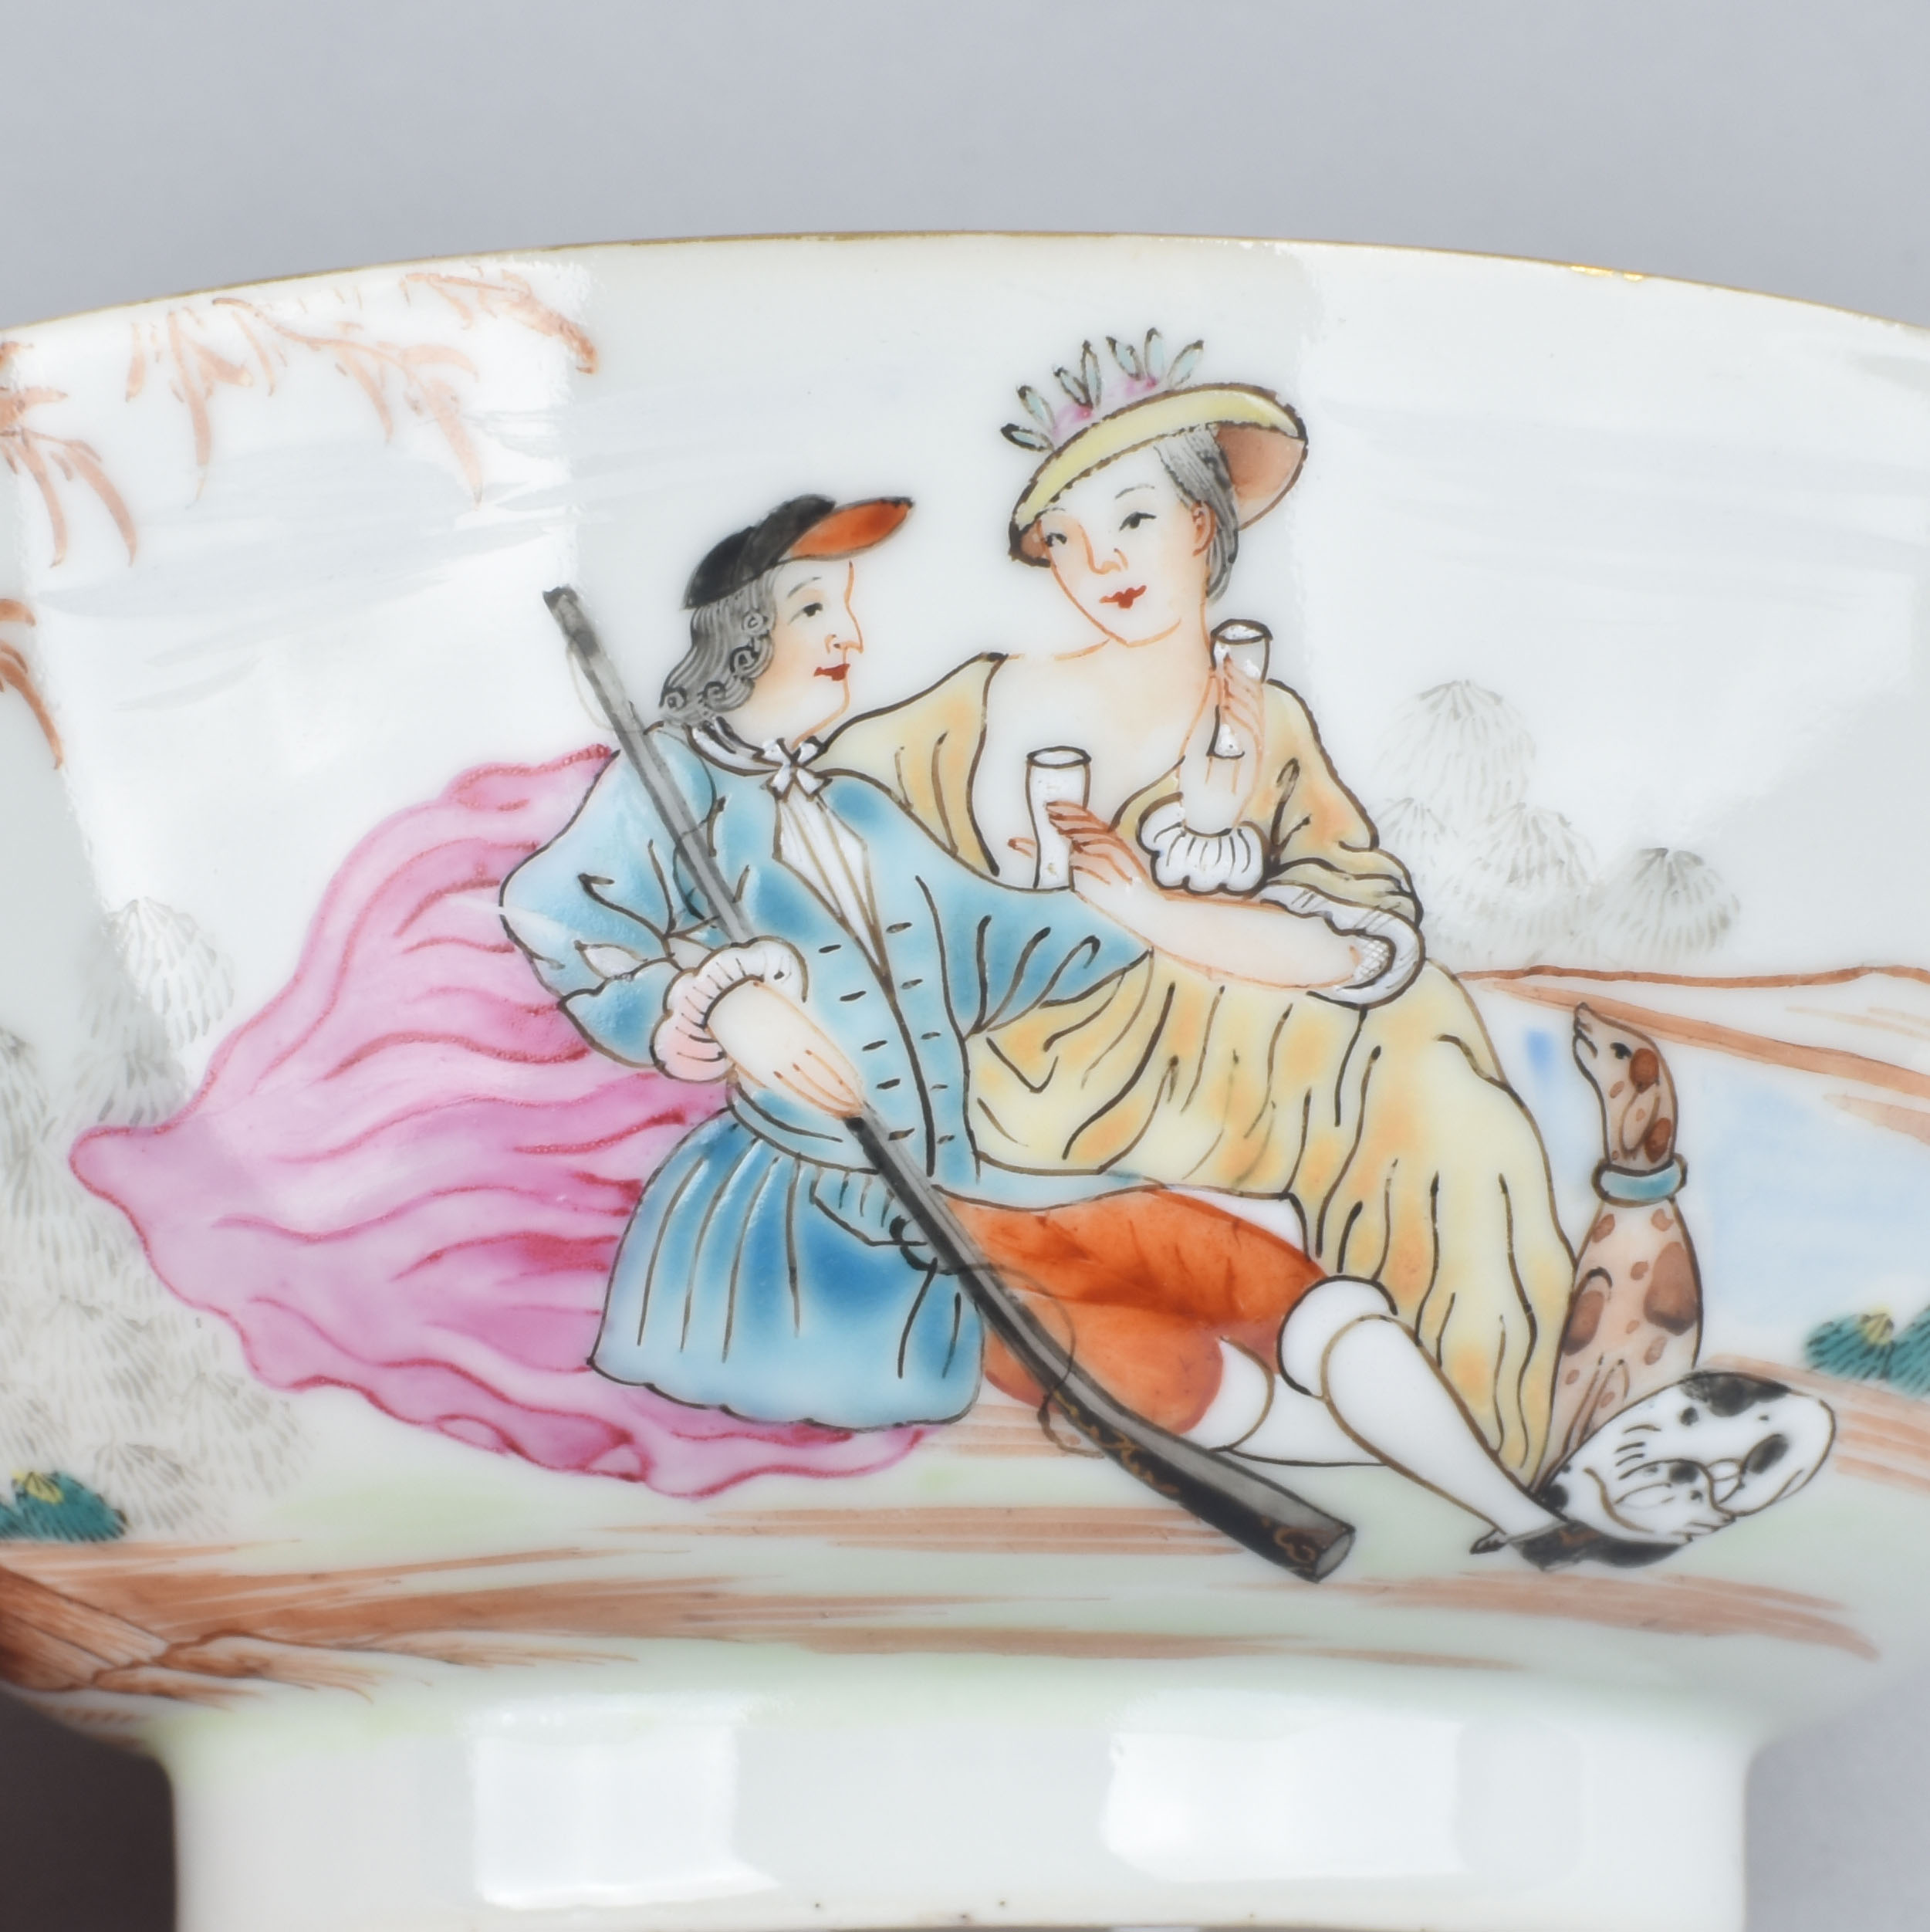 Porcelaine Qianlong (1736-1795), circa 1750, Chine